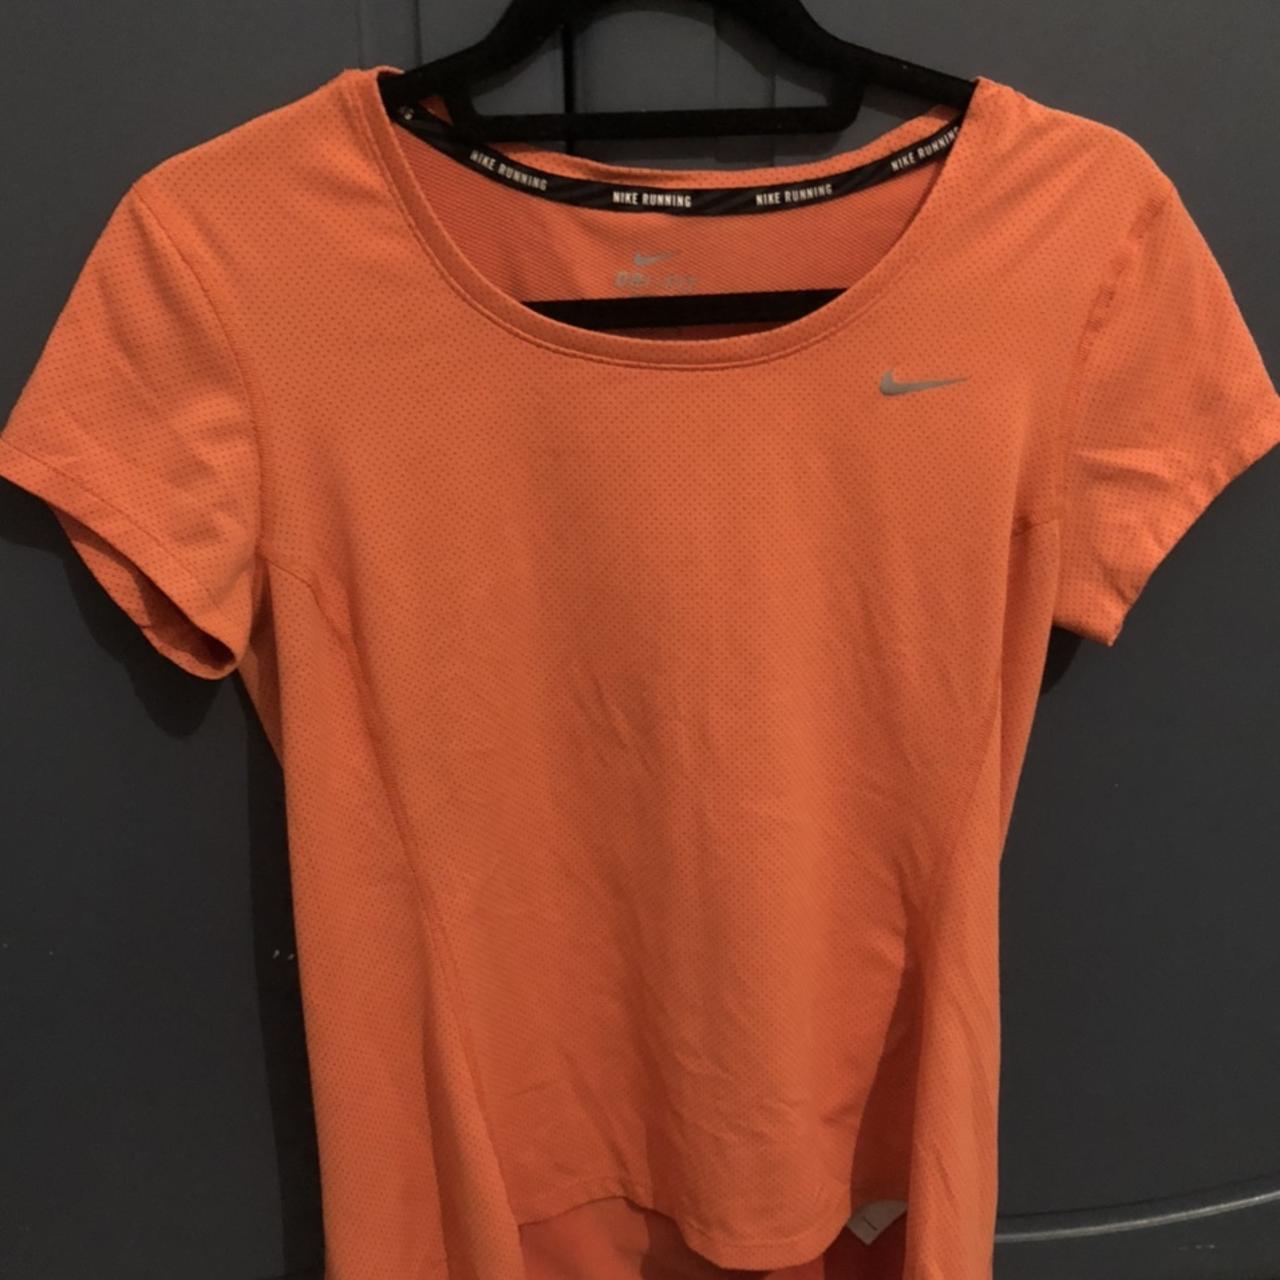 Nike Women's Pink and Orange T-shirt